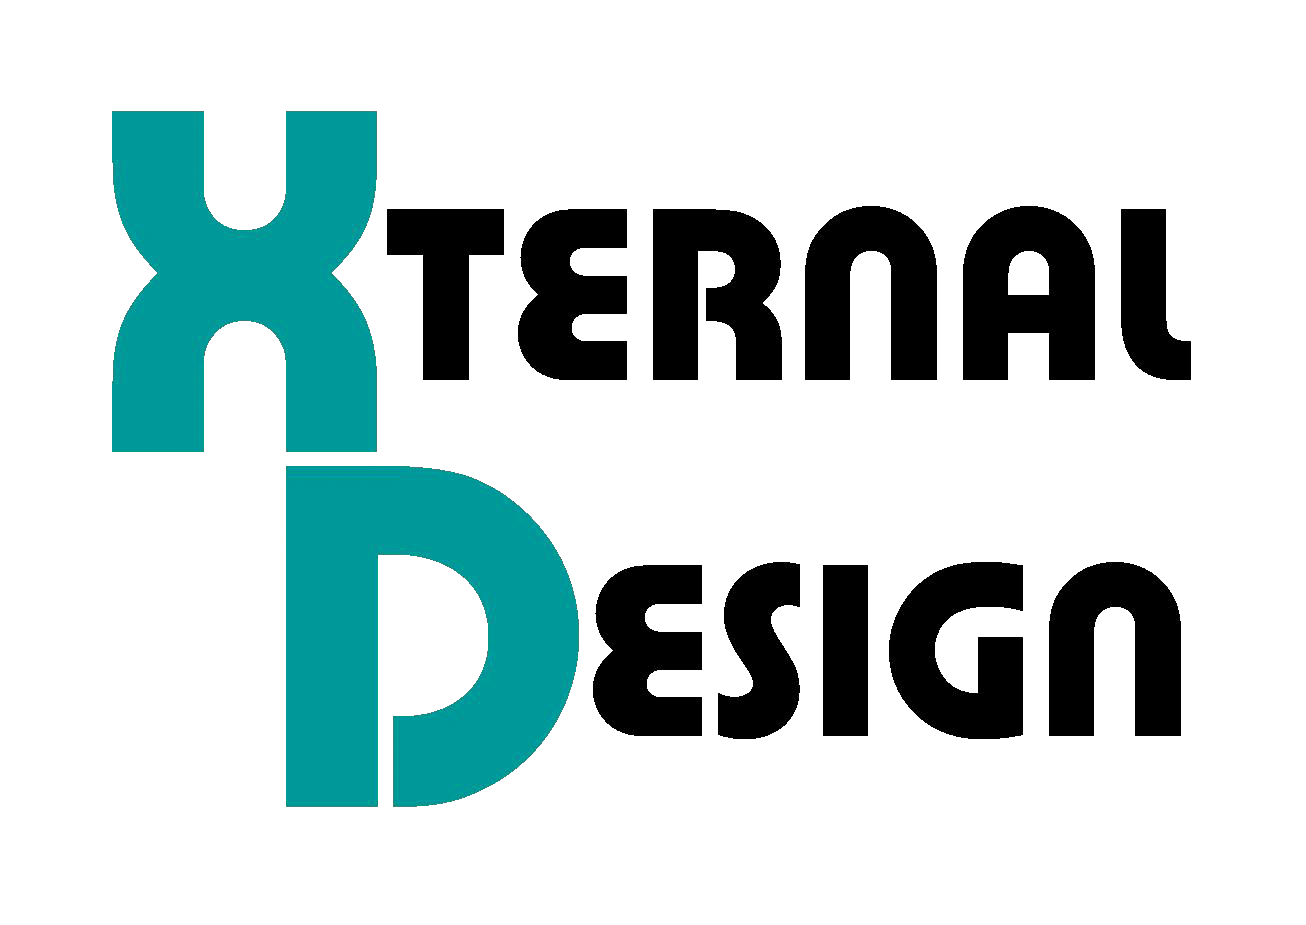 Xternal Design – Your Mechanical Design Resource